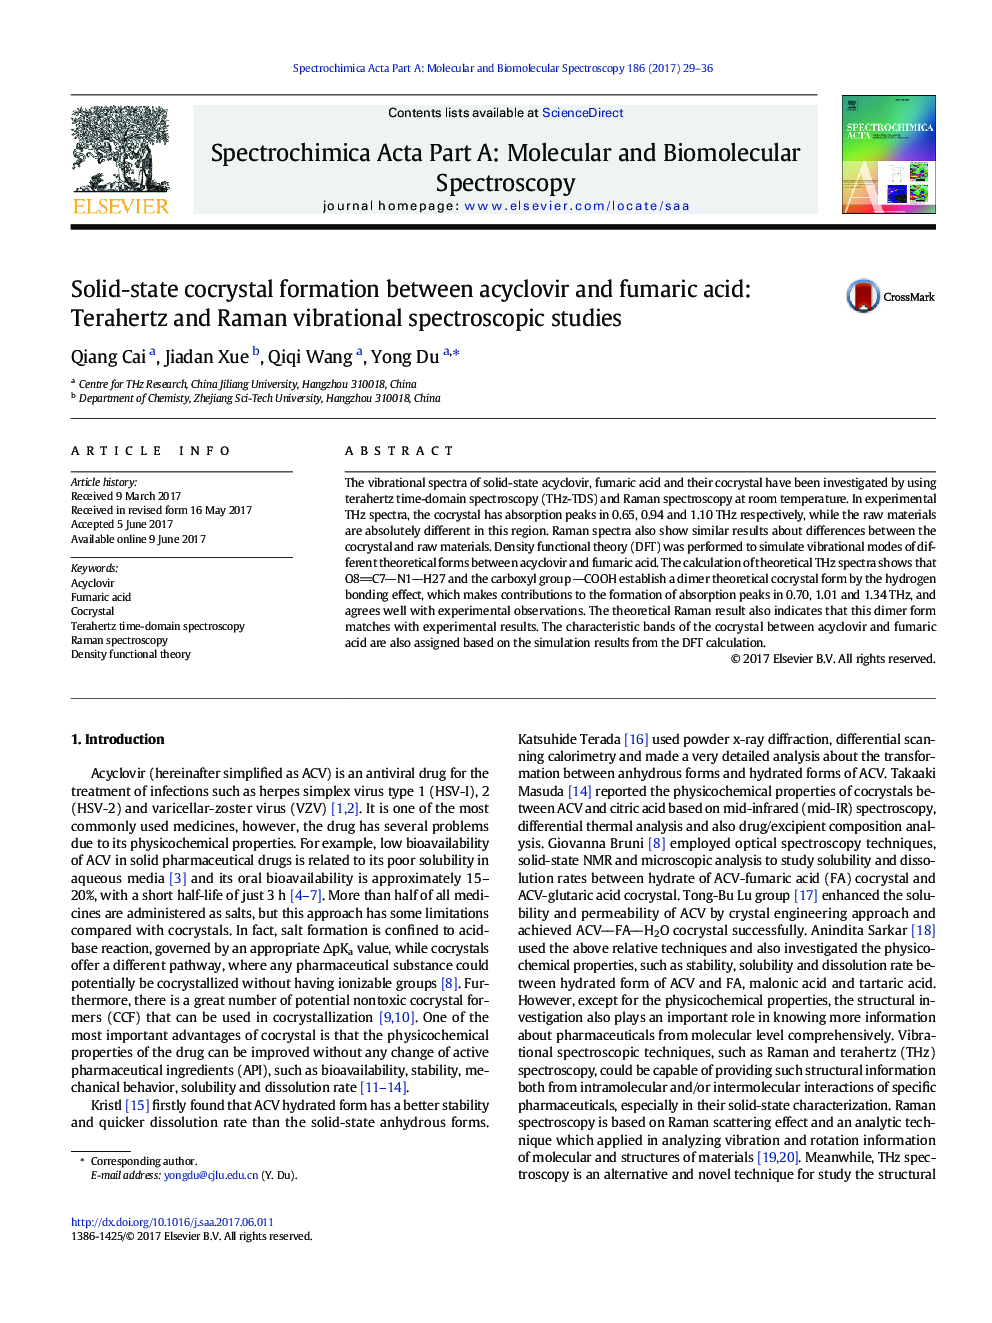 Solid-state cocrystal formation between acyclovir and fumaric acid: Terahertz and Raman vibrational spectroscopic studies